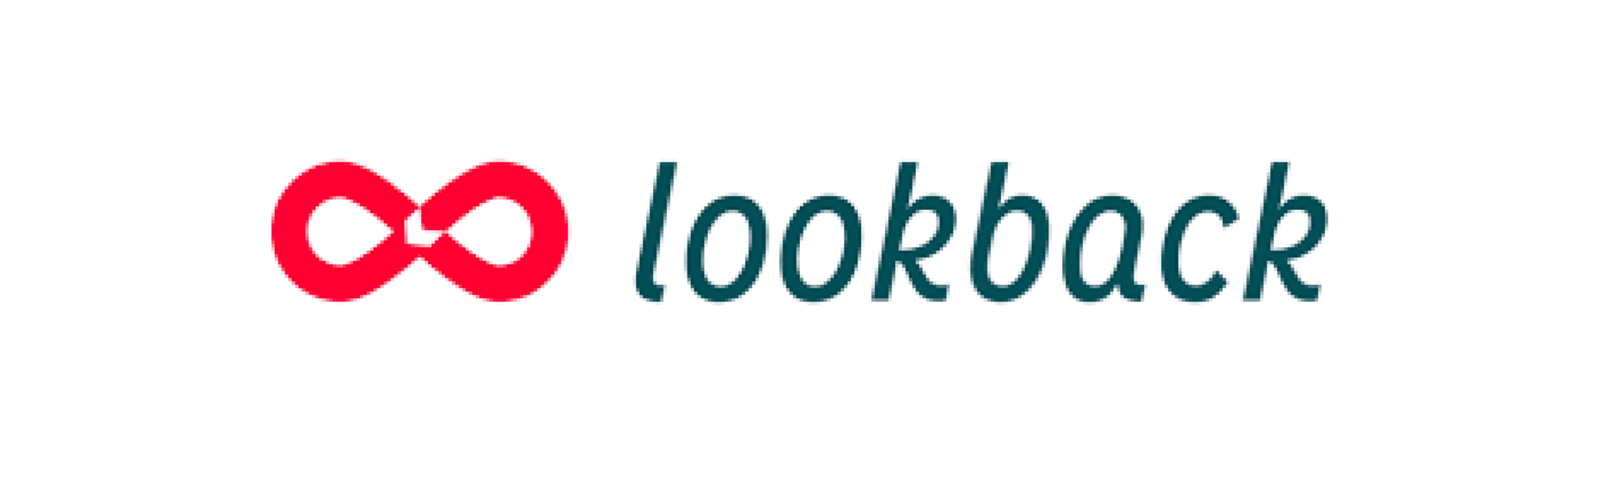 Lookback user testing tools